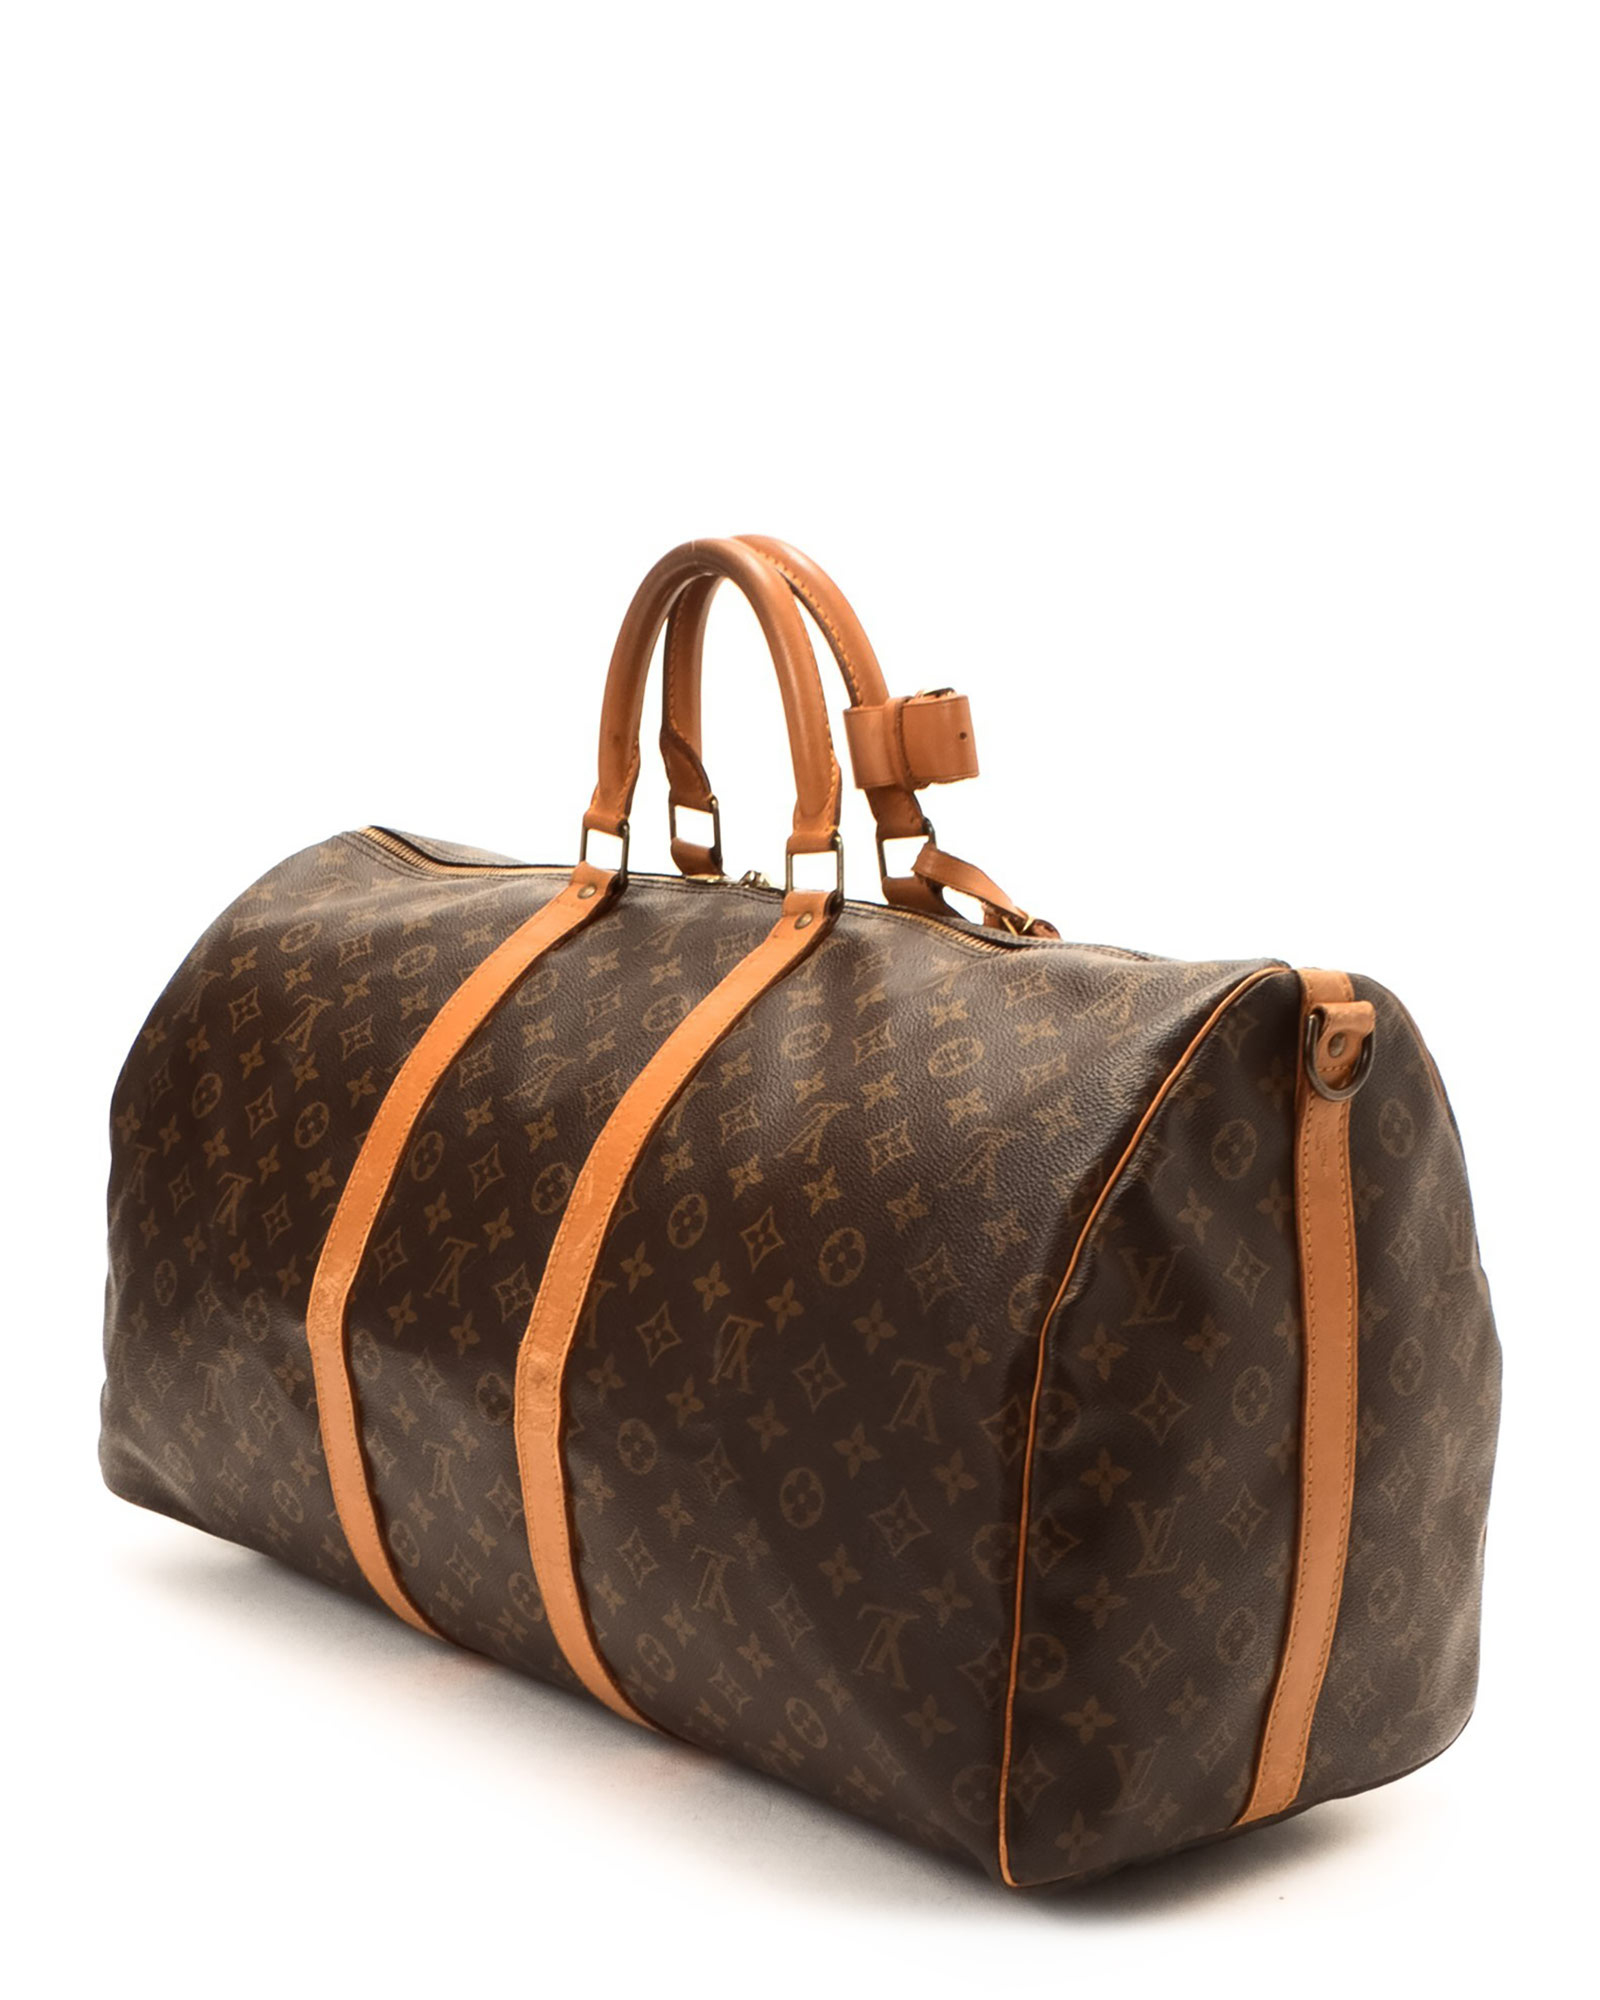 Lyst - Louis Vuitton Travel Bag - Vintage in Brown for Men